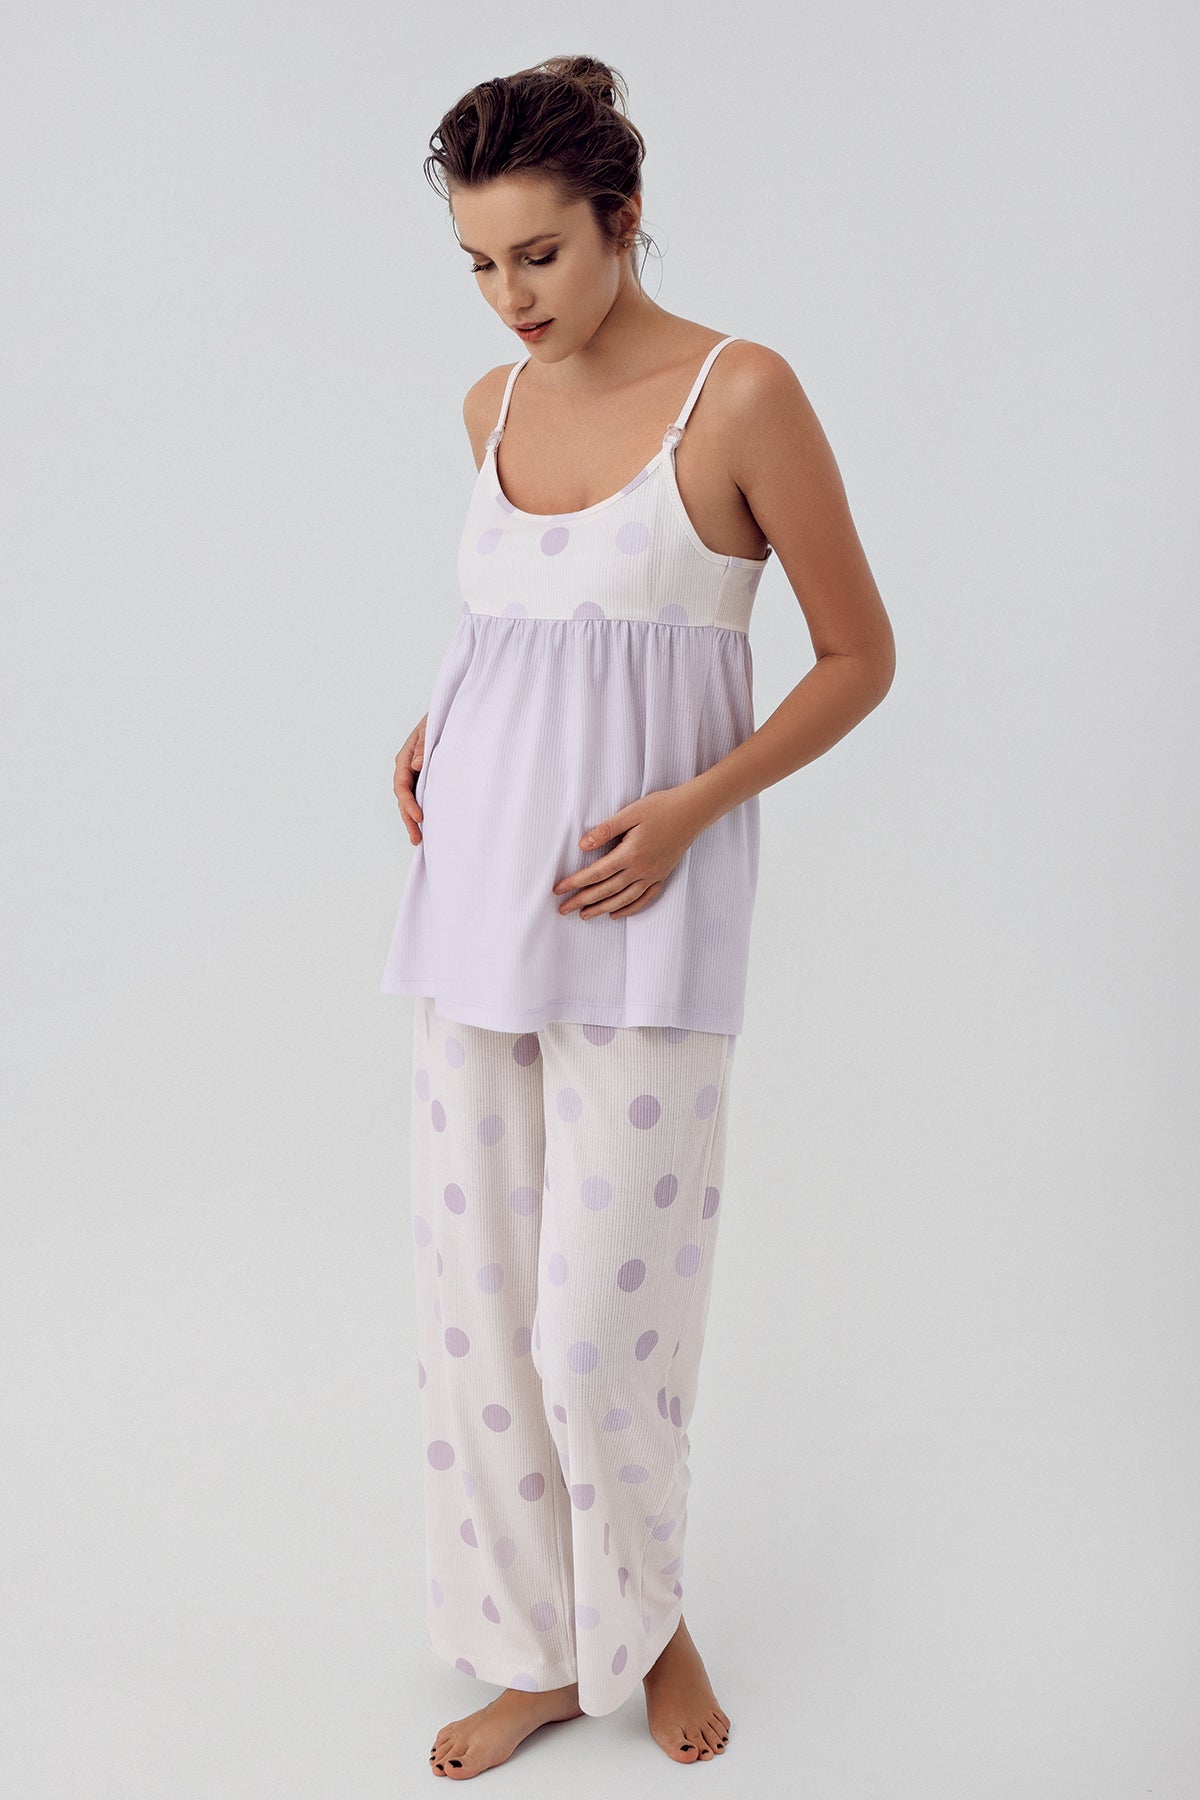 Shopymommy 16301 Polka Dot 3-Pieces Maternity & Nursing Pajamas With Robe Lilac